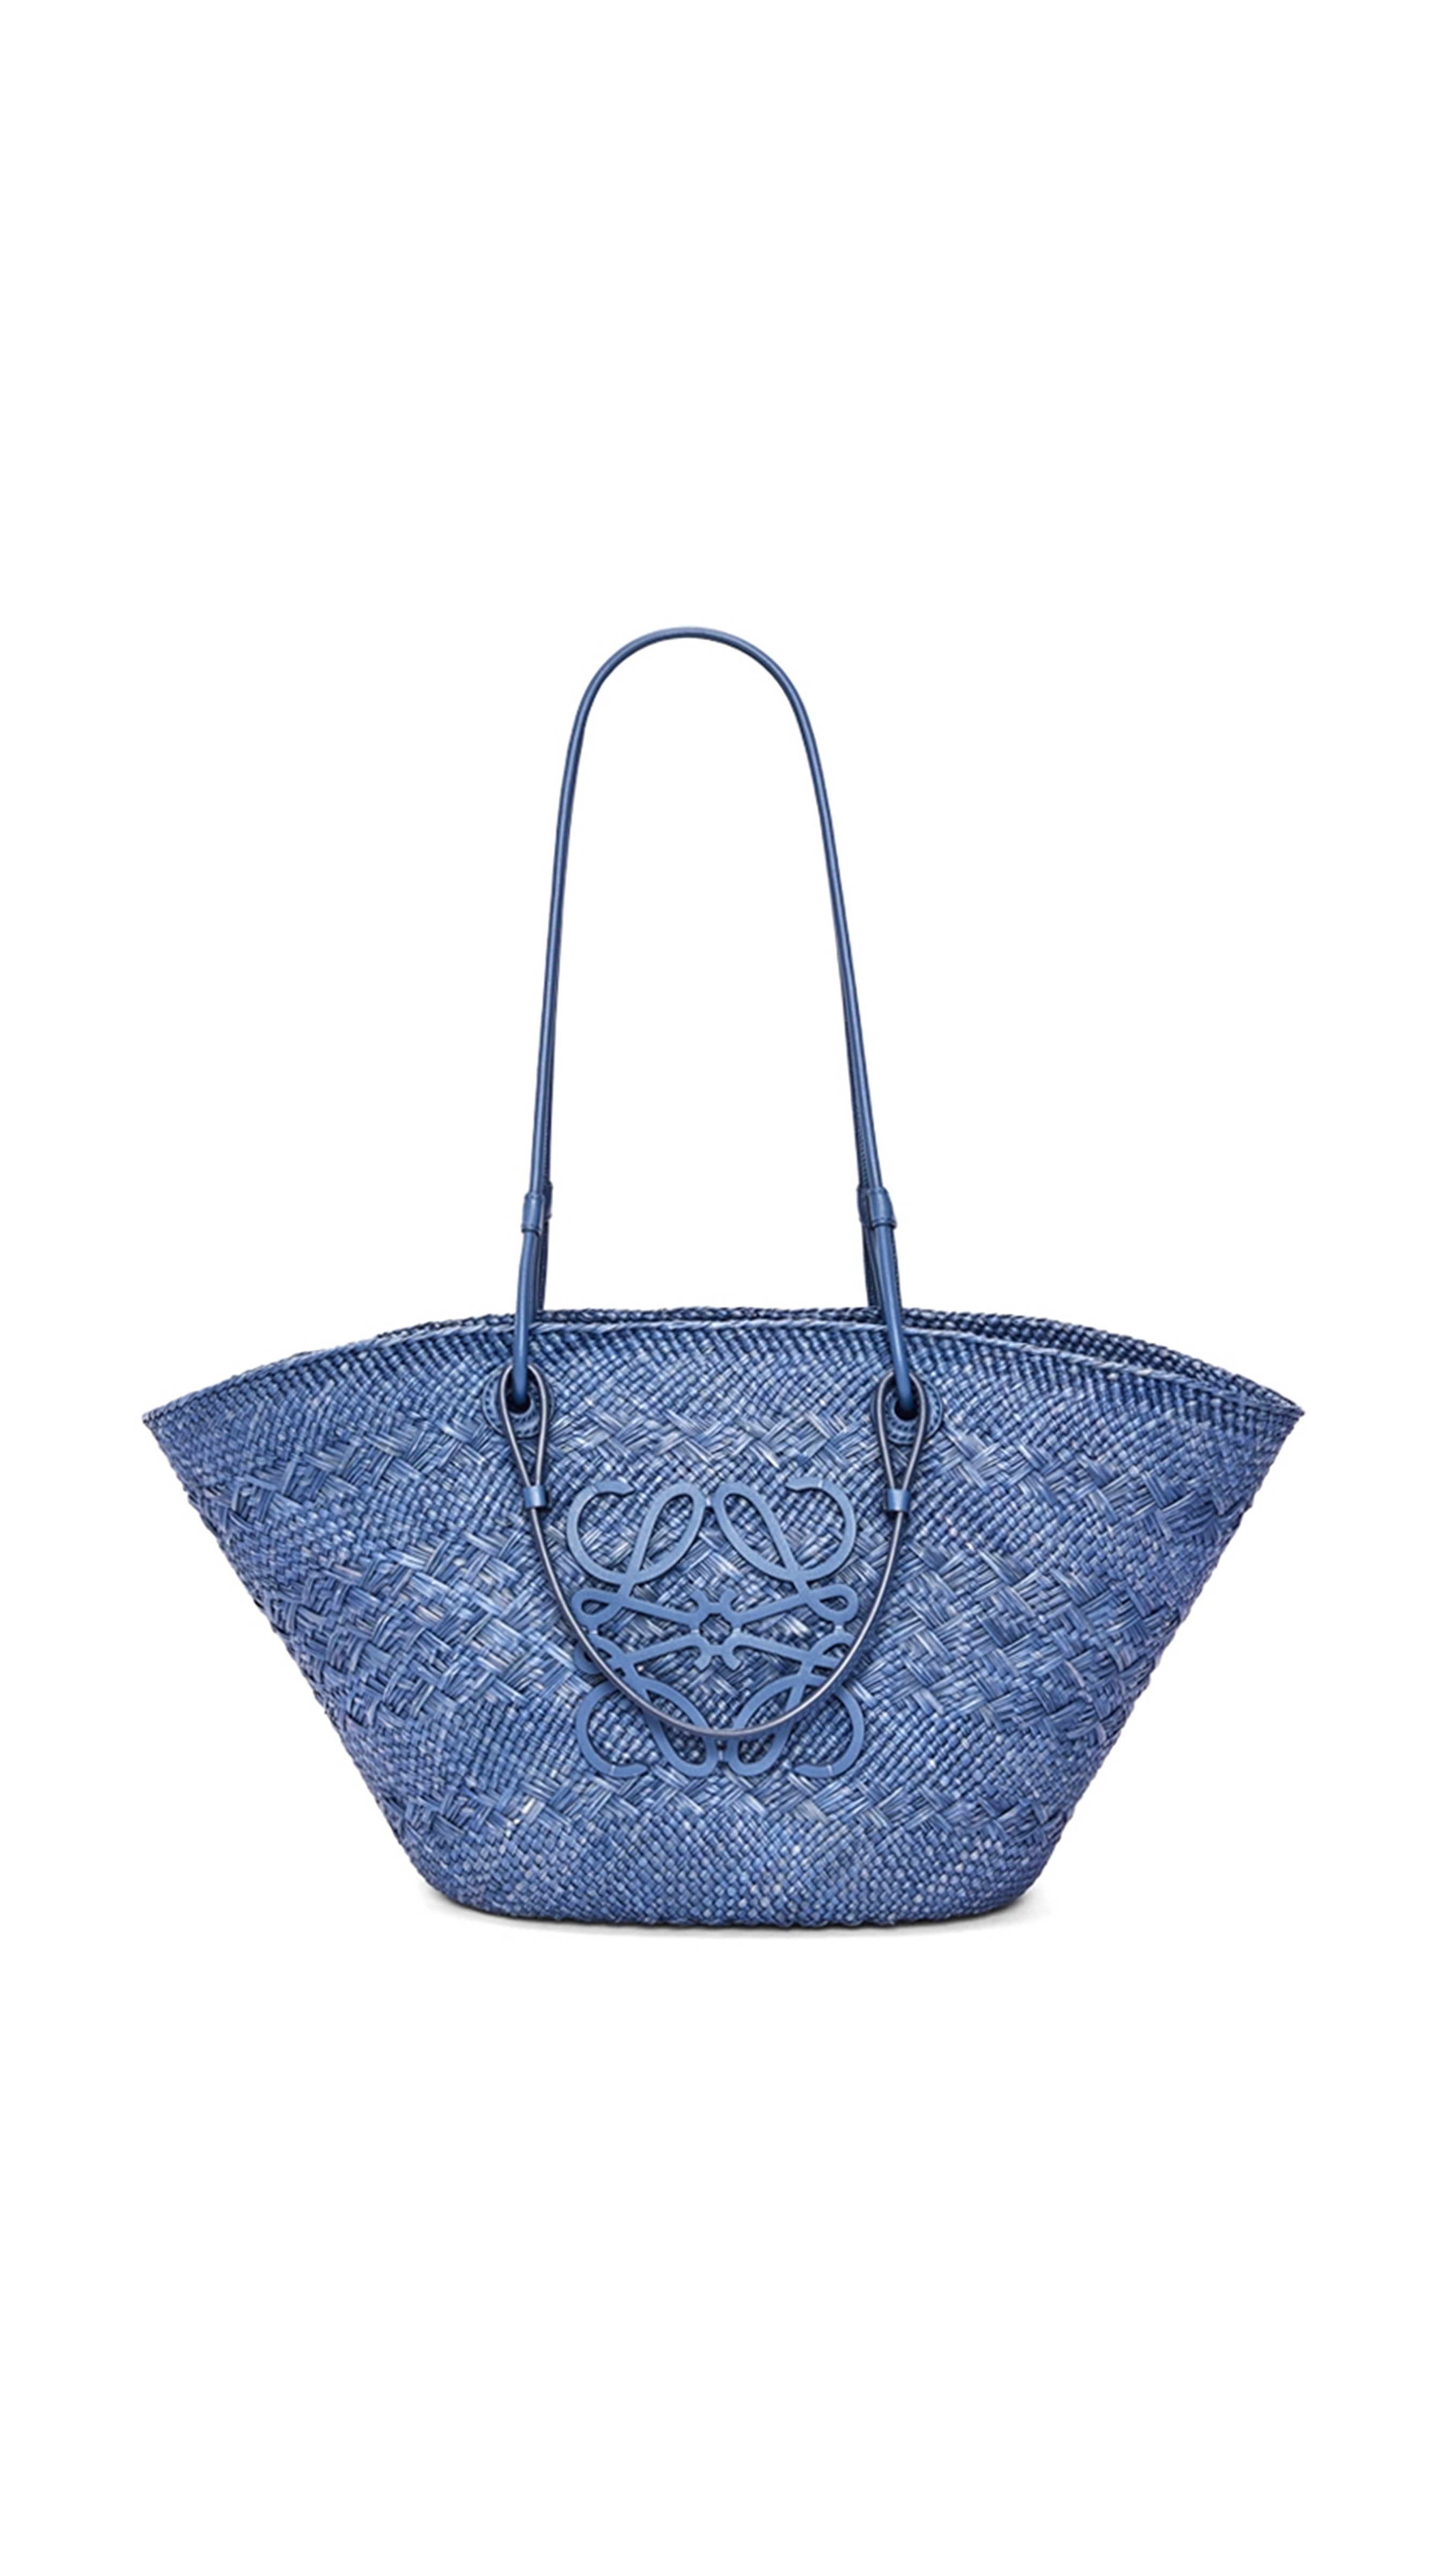 Anagram Basket Bag in Iraca Palm and Calfskin - Denim Blue